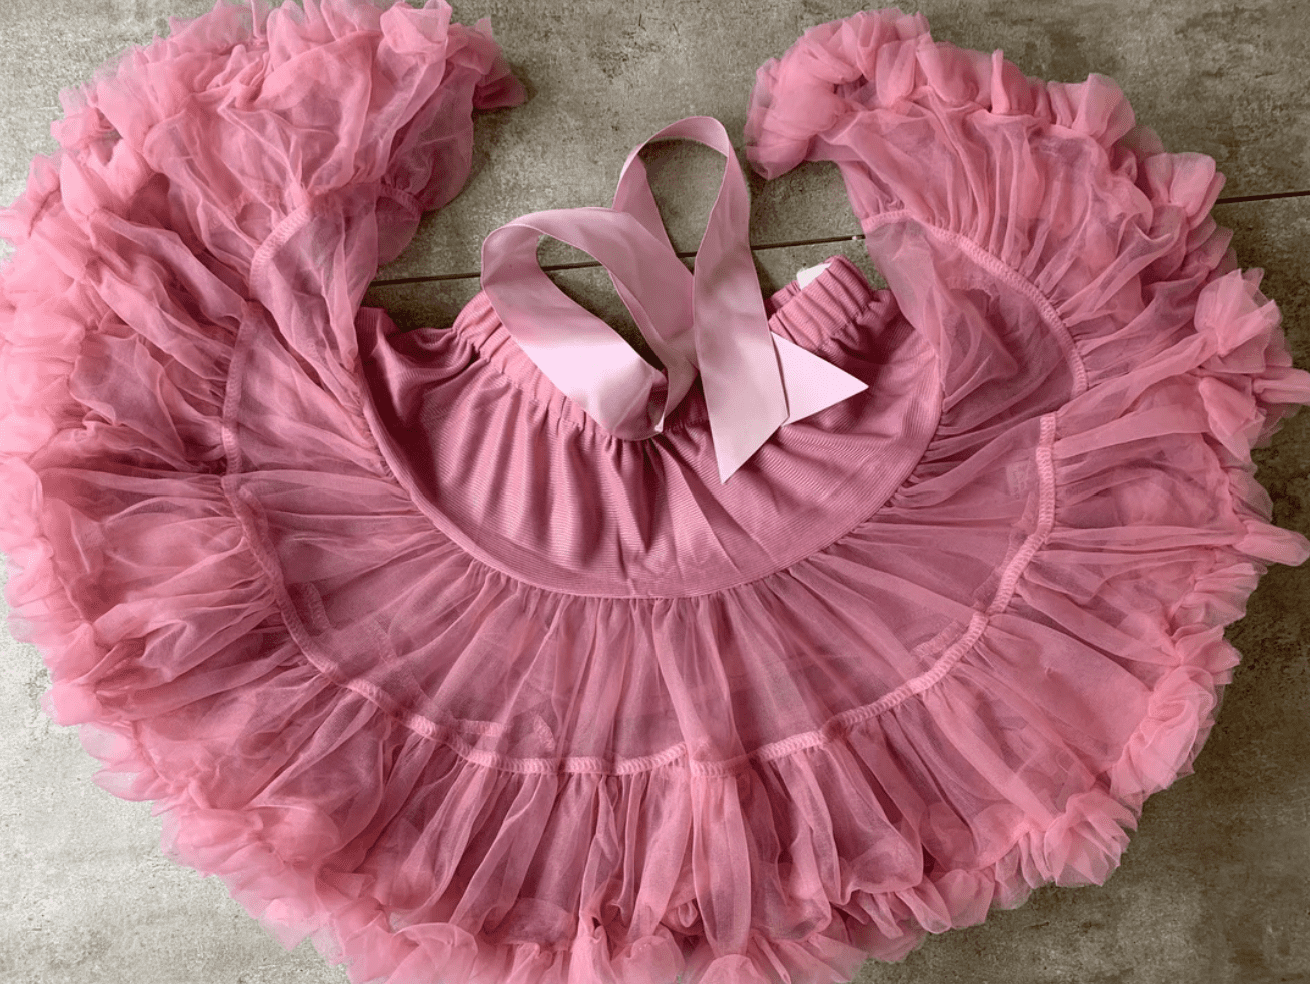 Hot Pink Fluffy Layered Tutu Skirt -  Girls Ballerina Pettiskirt, Fluffy Children Ballet Skirts.